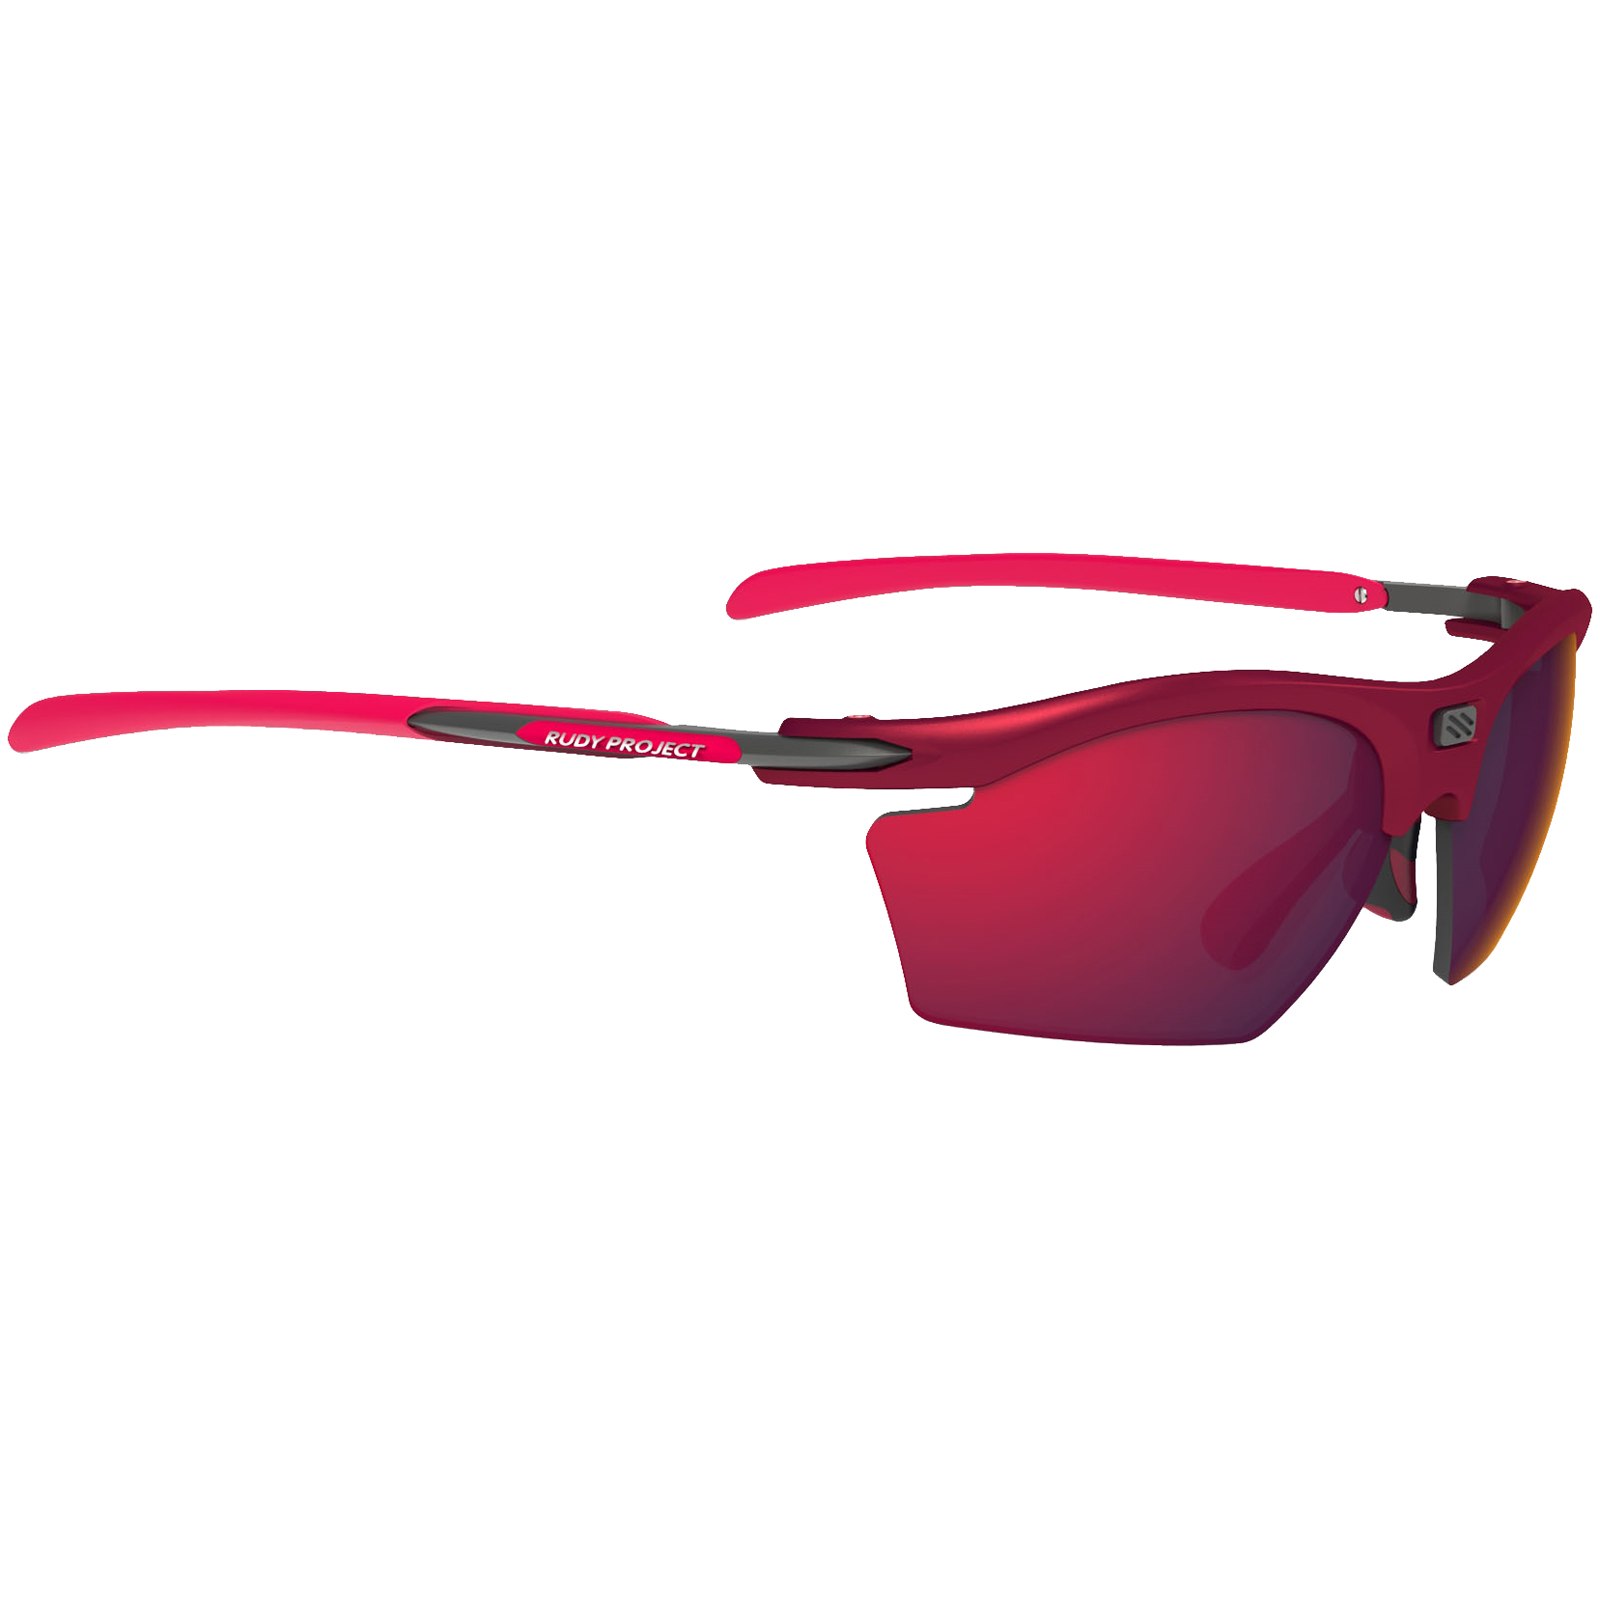 Productfoto van Rudy Project Rydon Slim Glasses - Merlot Matte/Multilaser Red